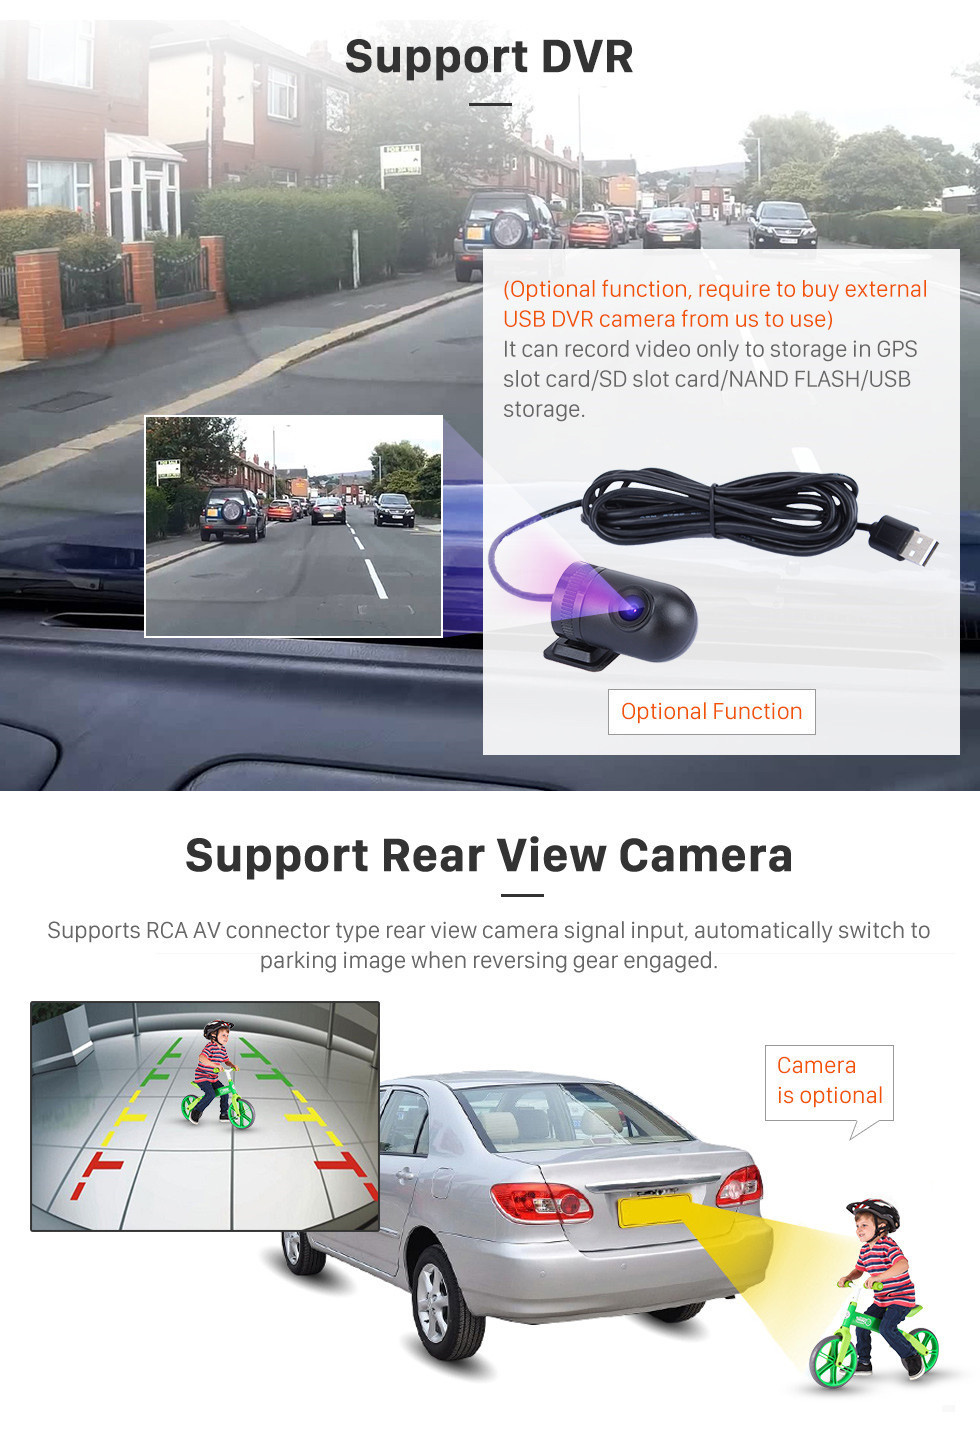 Seicane OEM 9 inch Android 11.0 Radio for 2016-2019 Kia Niro Bluetooth Wifi HD Touchscreen GPS Navigation Carplay USB support OBD2 DVR Digital TV TPMS